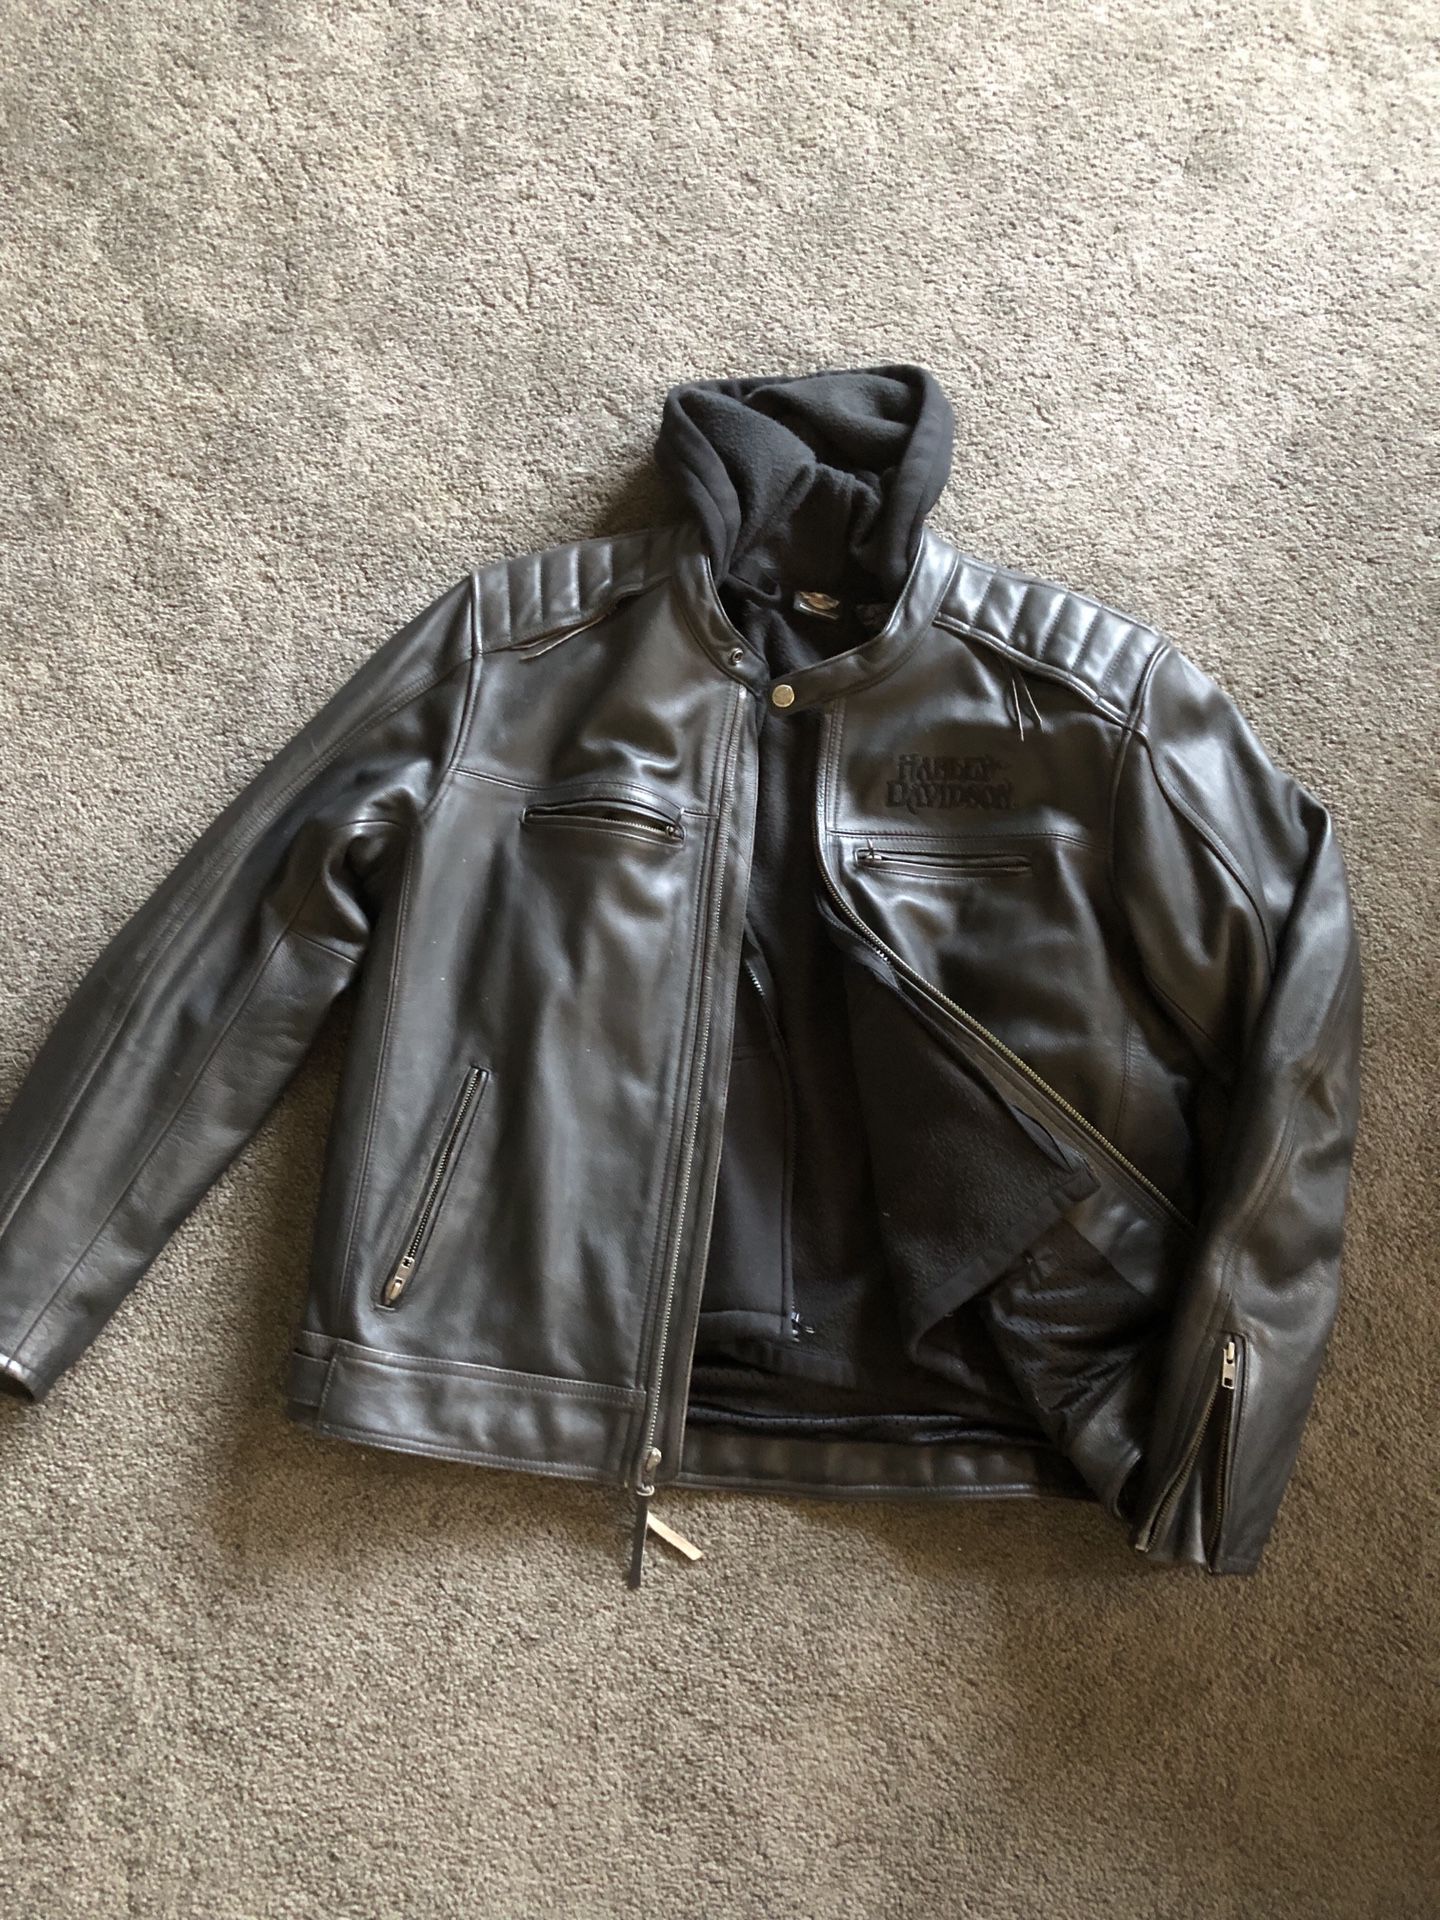 Men’s XL Leather Harley Davidson Skull riding jacket